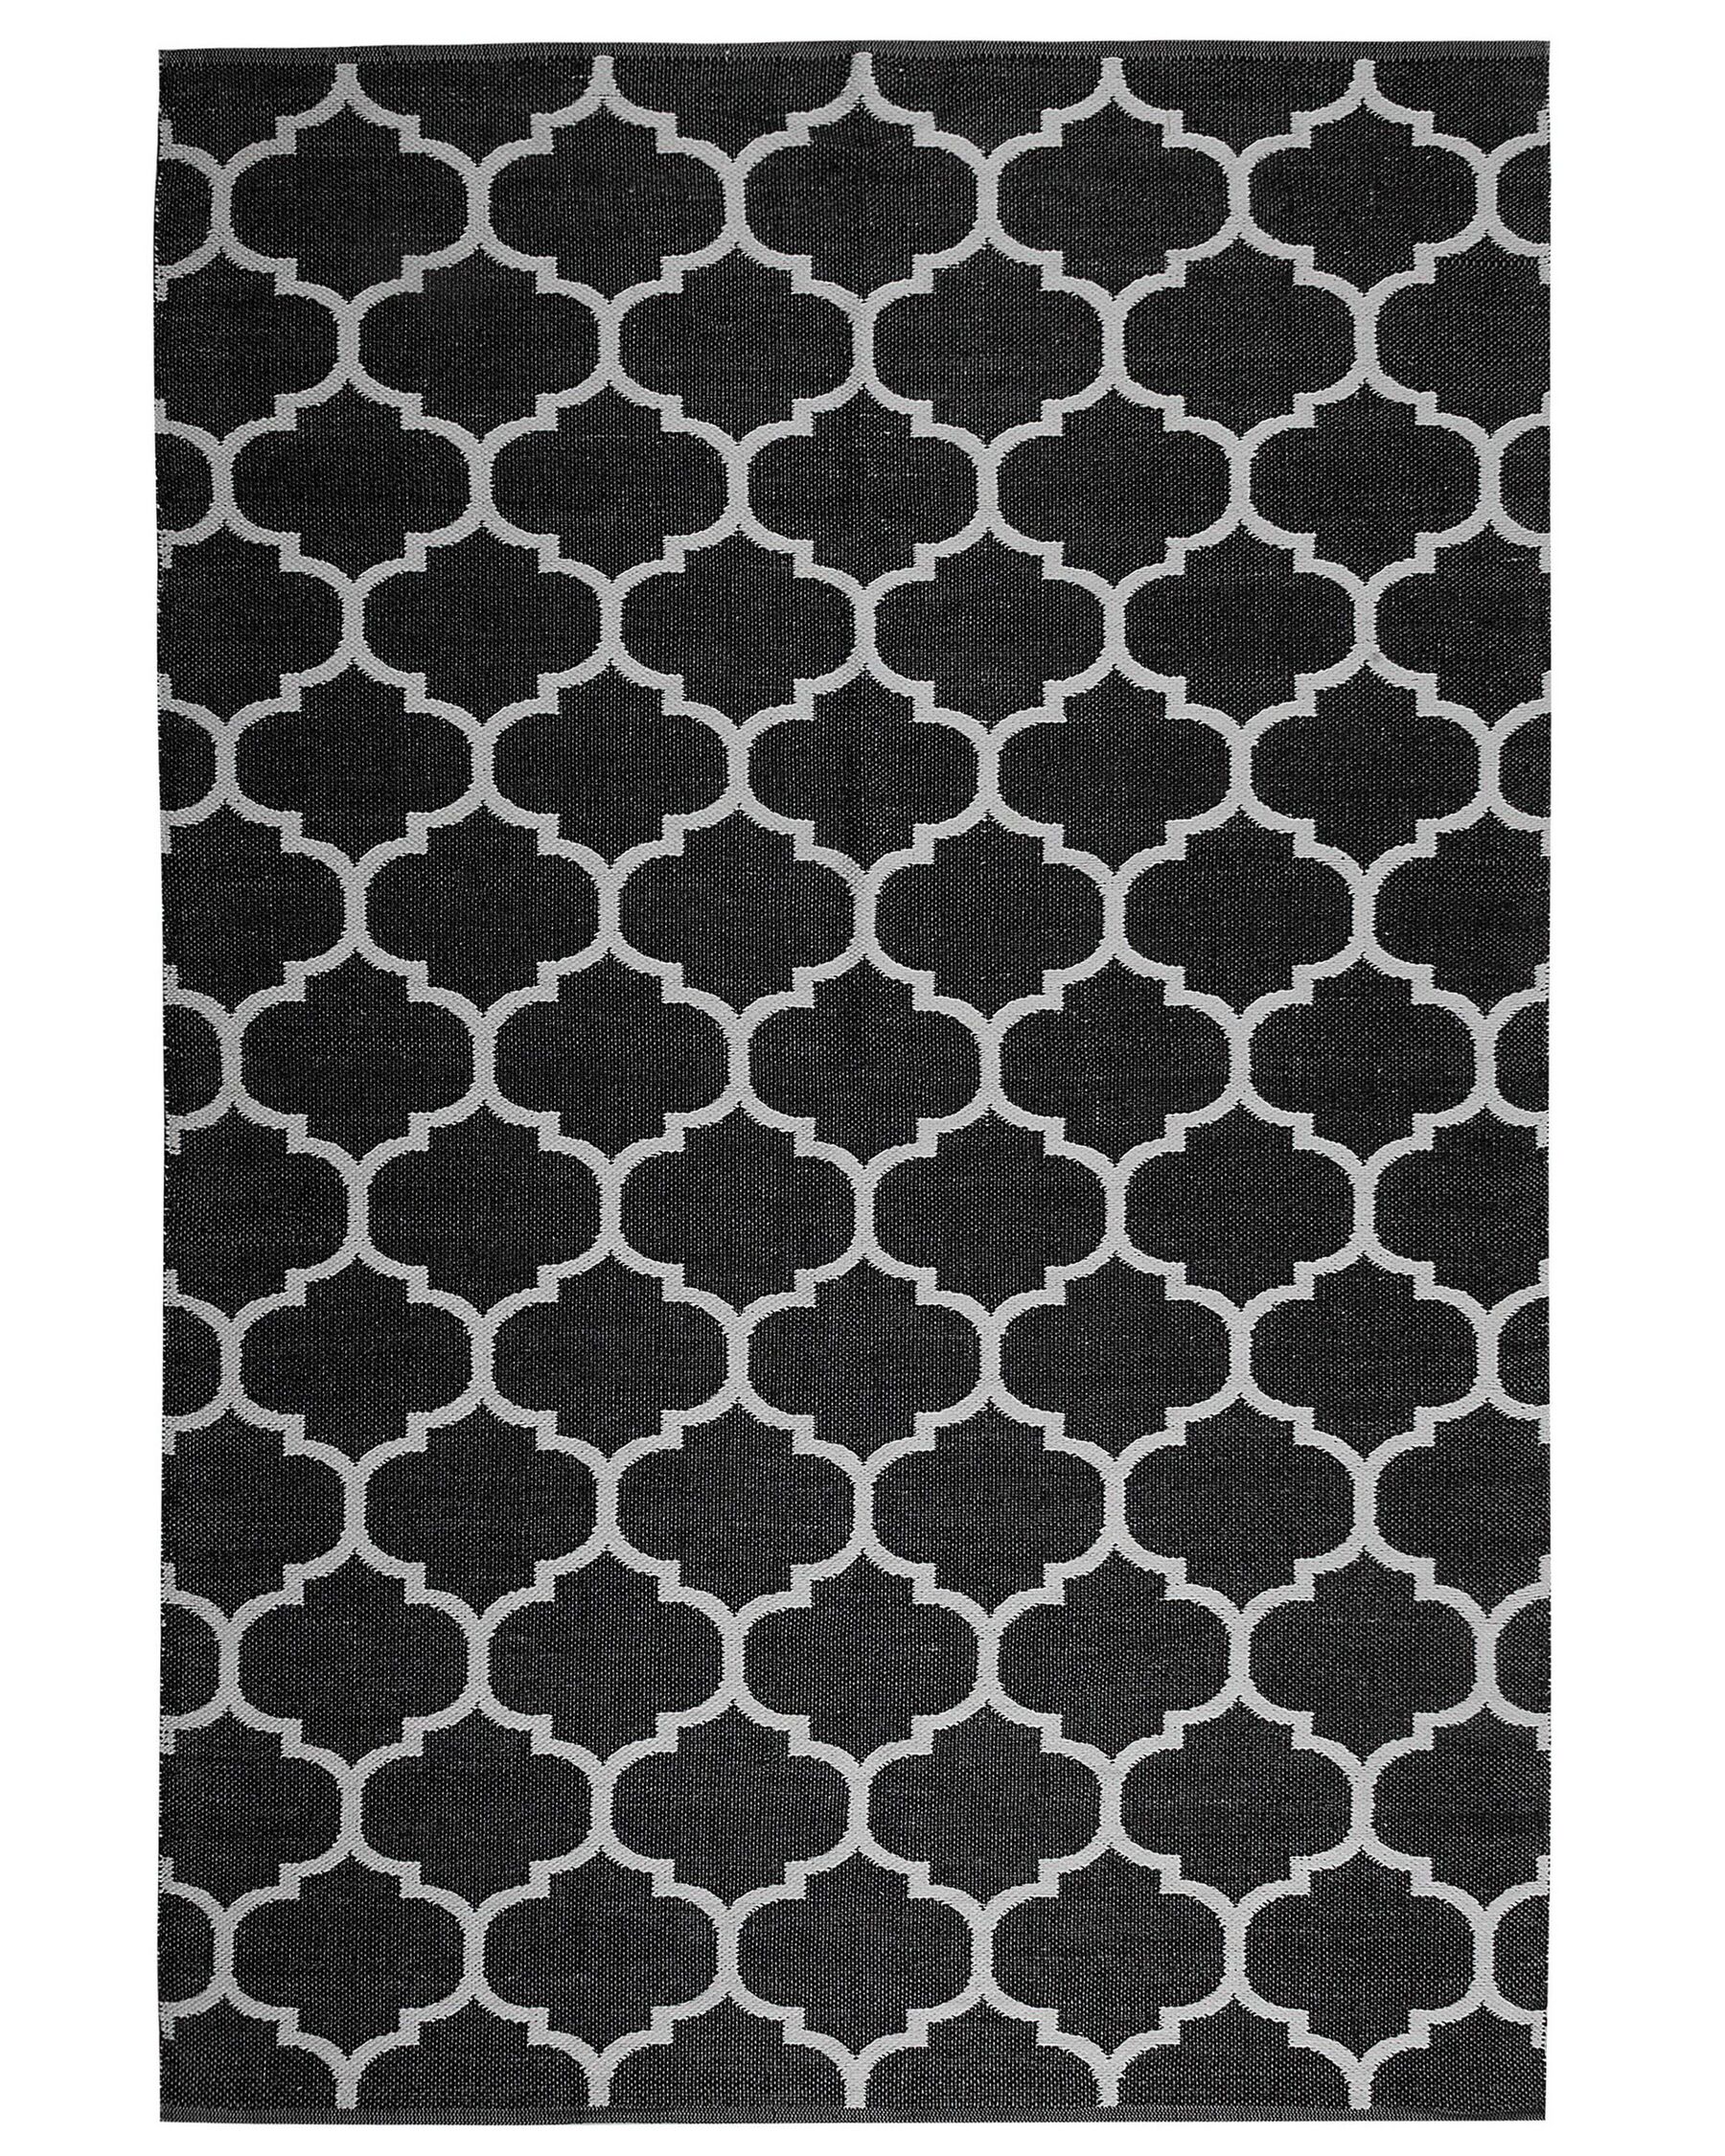 Vloerkleed polyester zwart/wit 140 x 200 cm ALADANA_733708